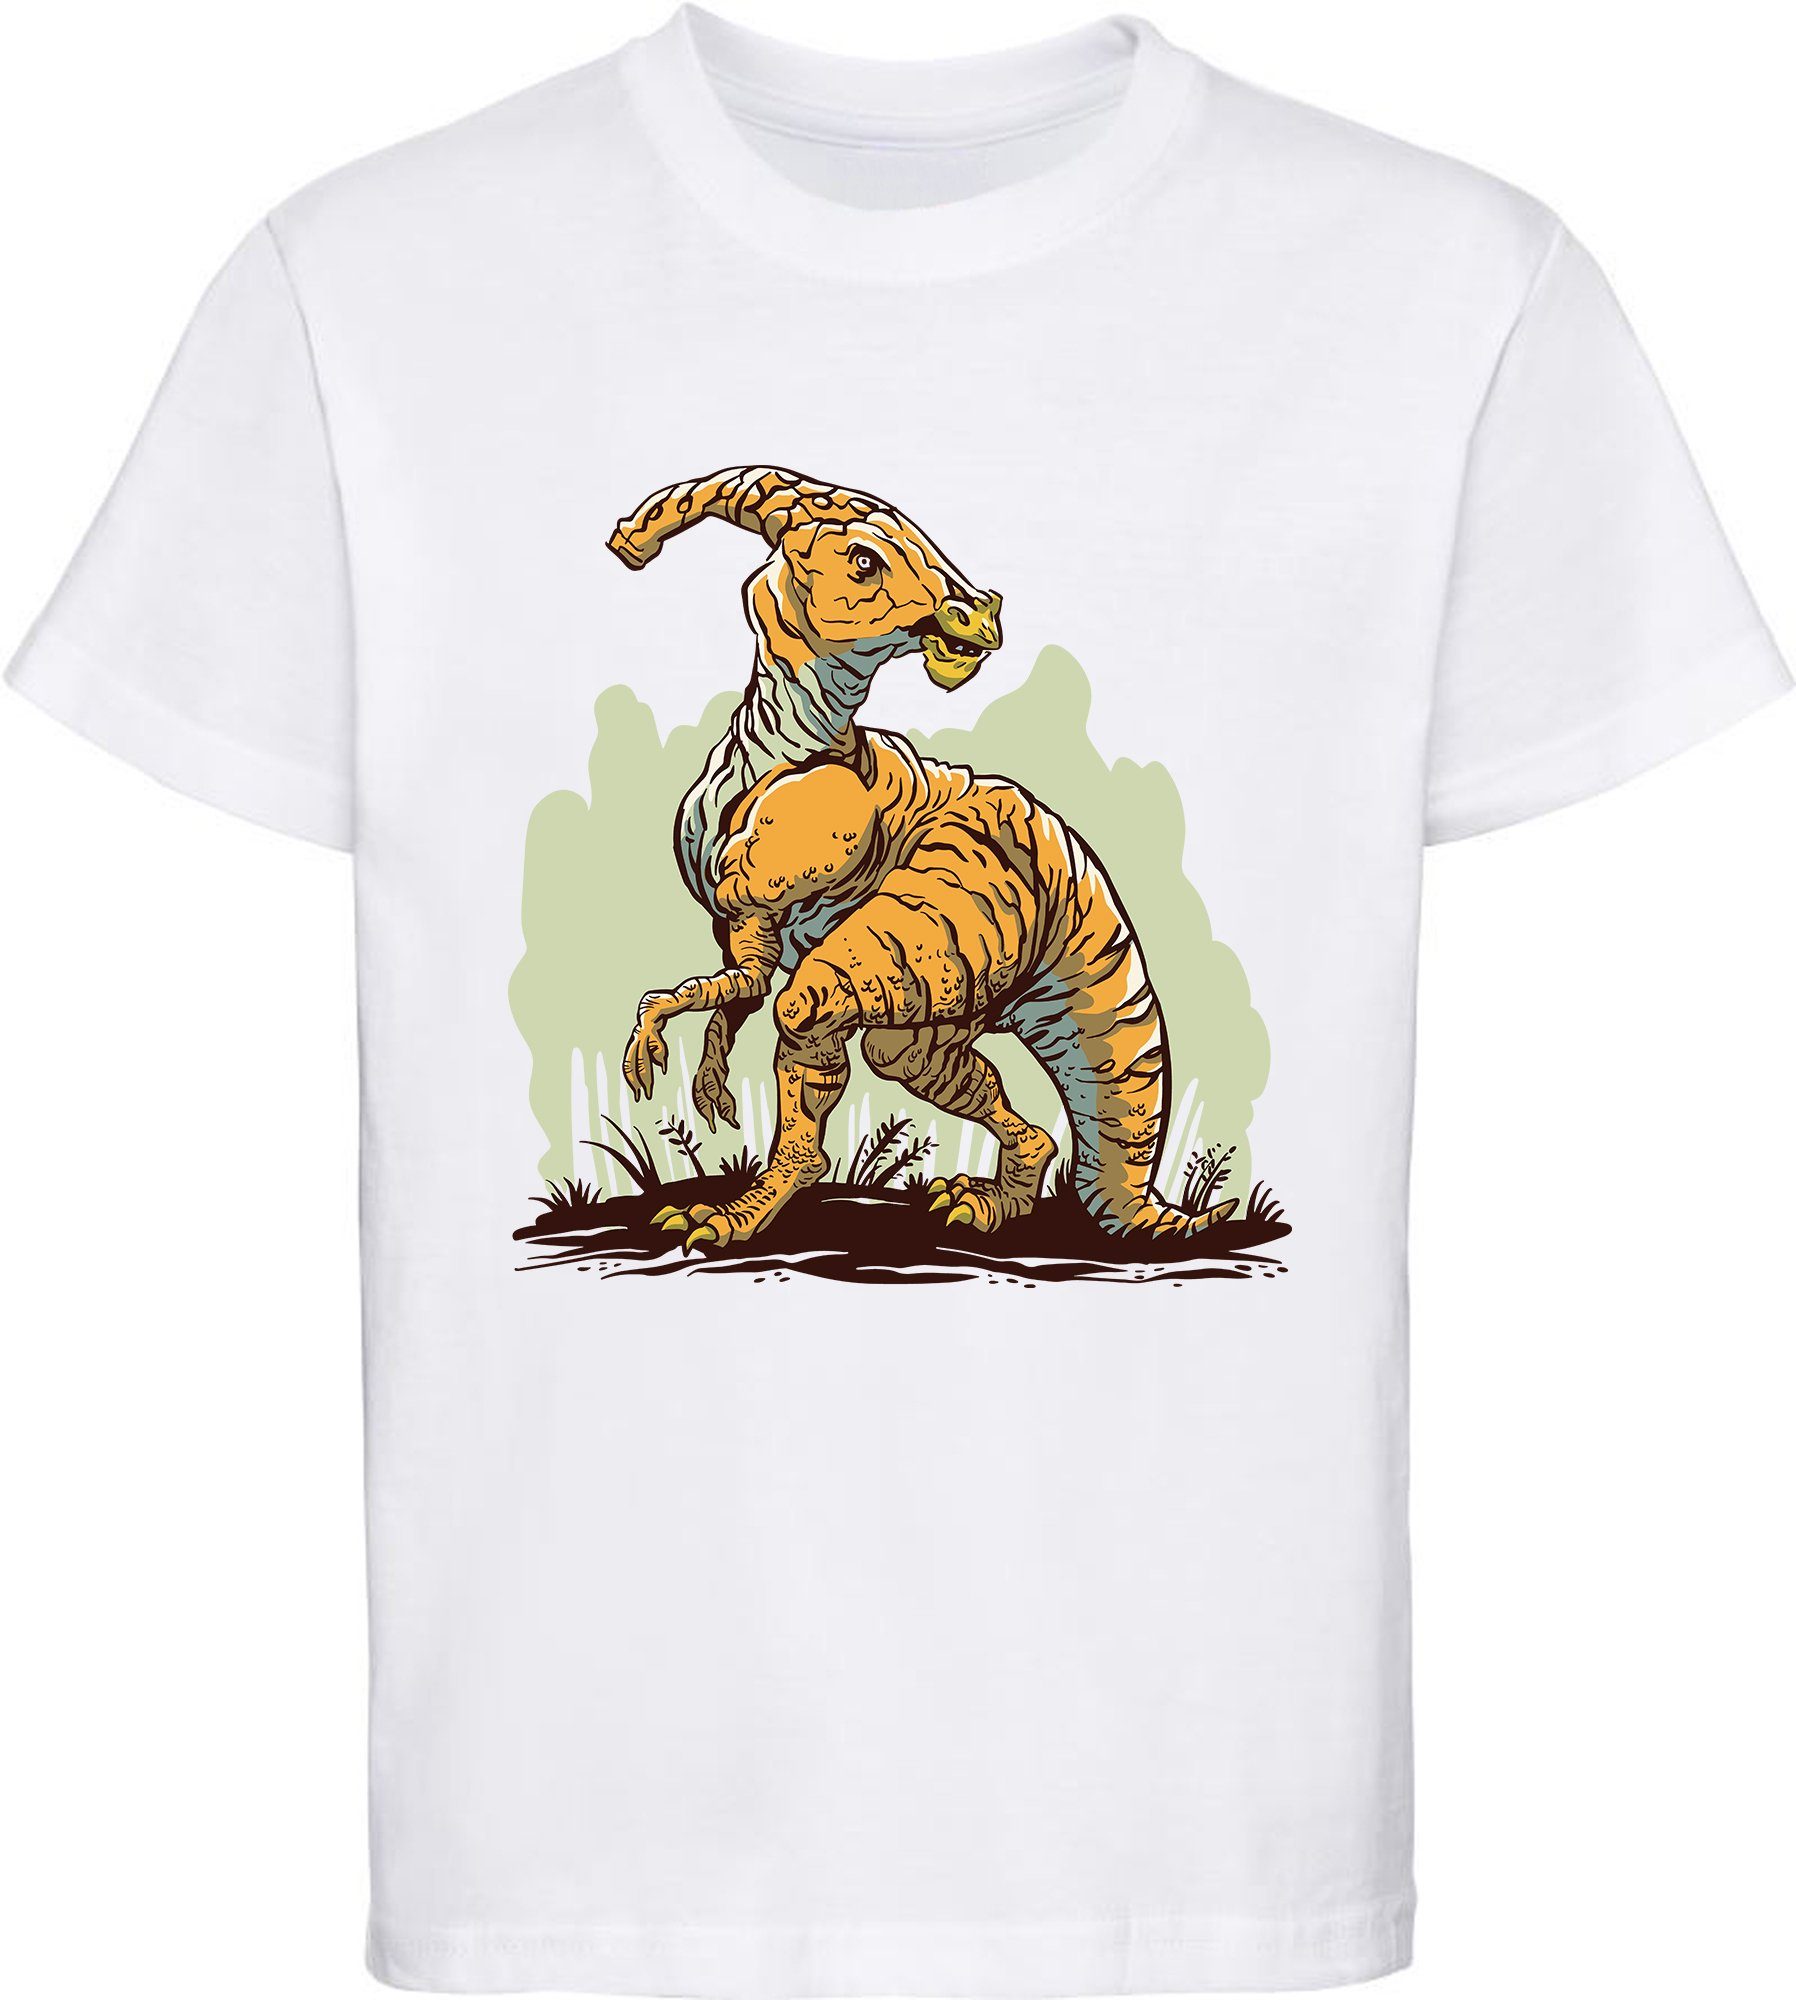 mit MyDesign24 Kinder Baumwollshirt T-Shirt Parasaurolophus Dino, i99 rot, blau, weiss weiß, schwarz, bedrucktes Print-Shirt